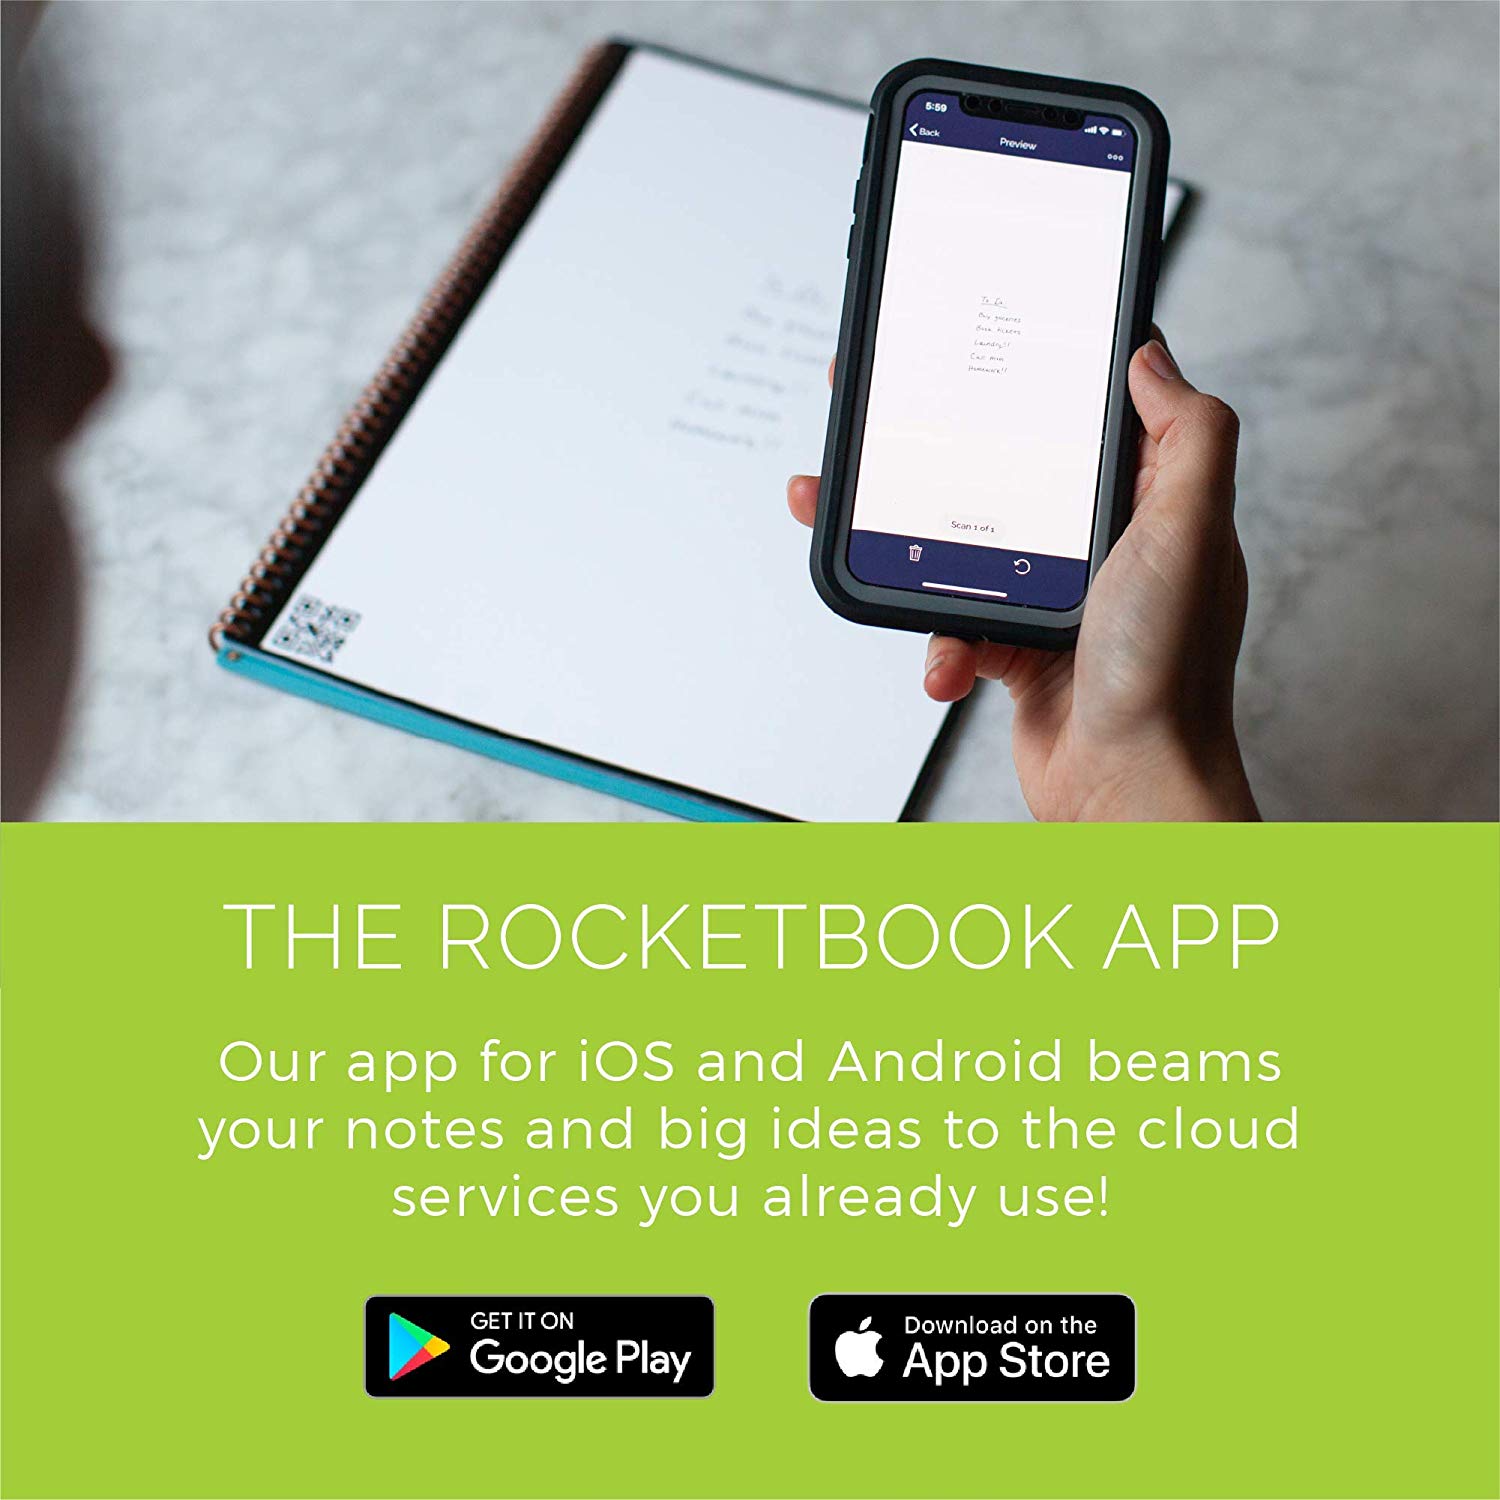 Rocketbook EVR-L-K-A Everlast Smart Reusable Notebook with Pen and Microfiber Cloth, Letter Size, Black